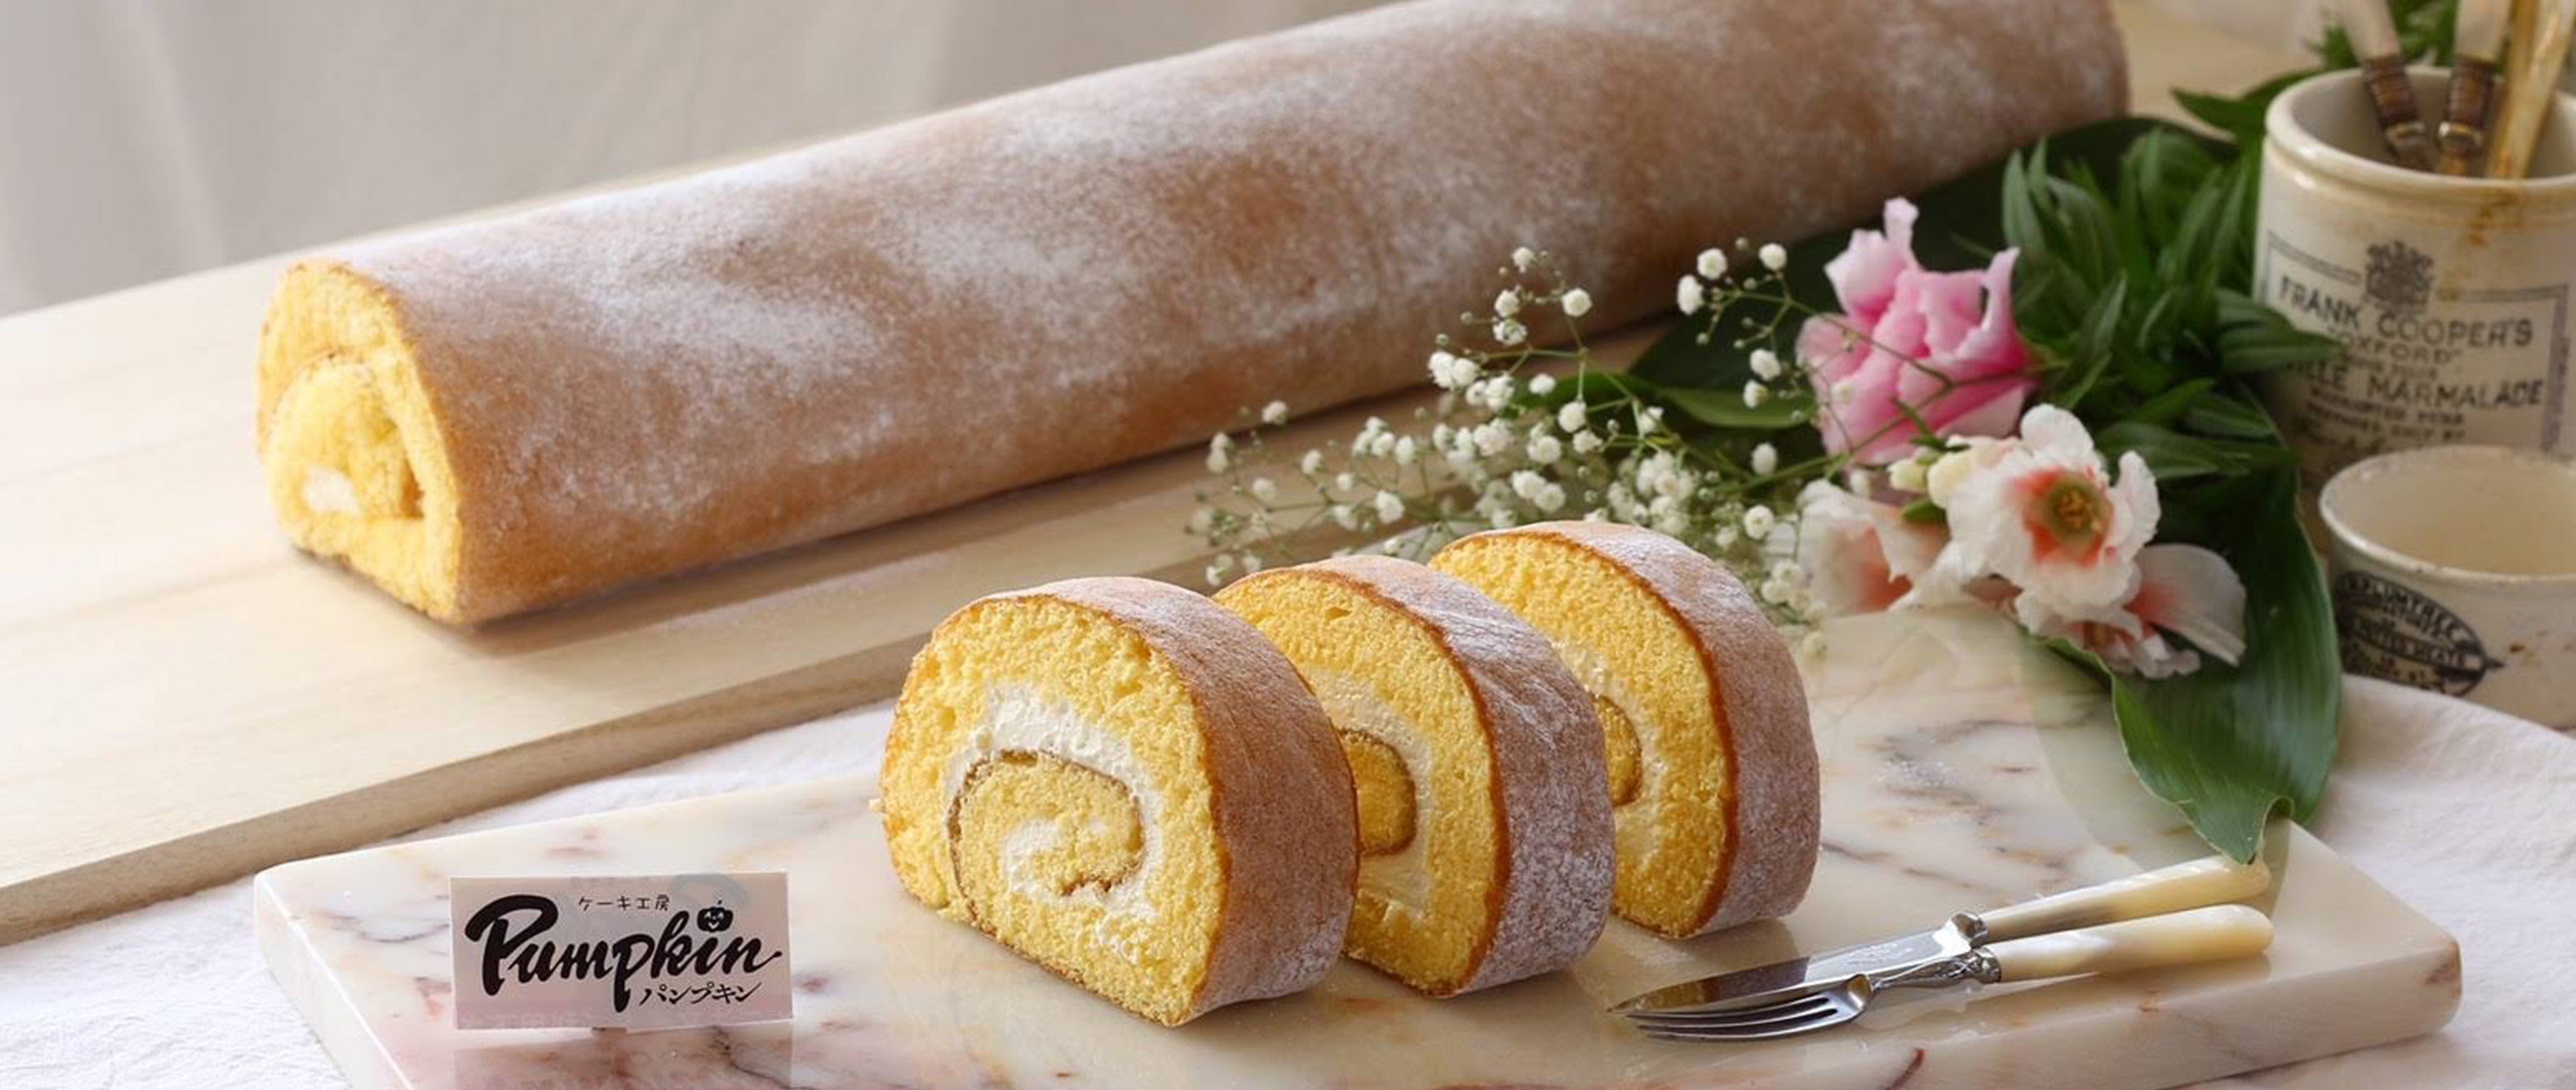 Wow! 50 cm! A Roll Cake? No! It's a Long Cake!